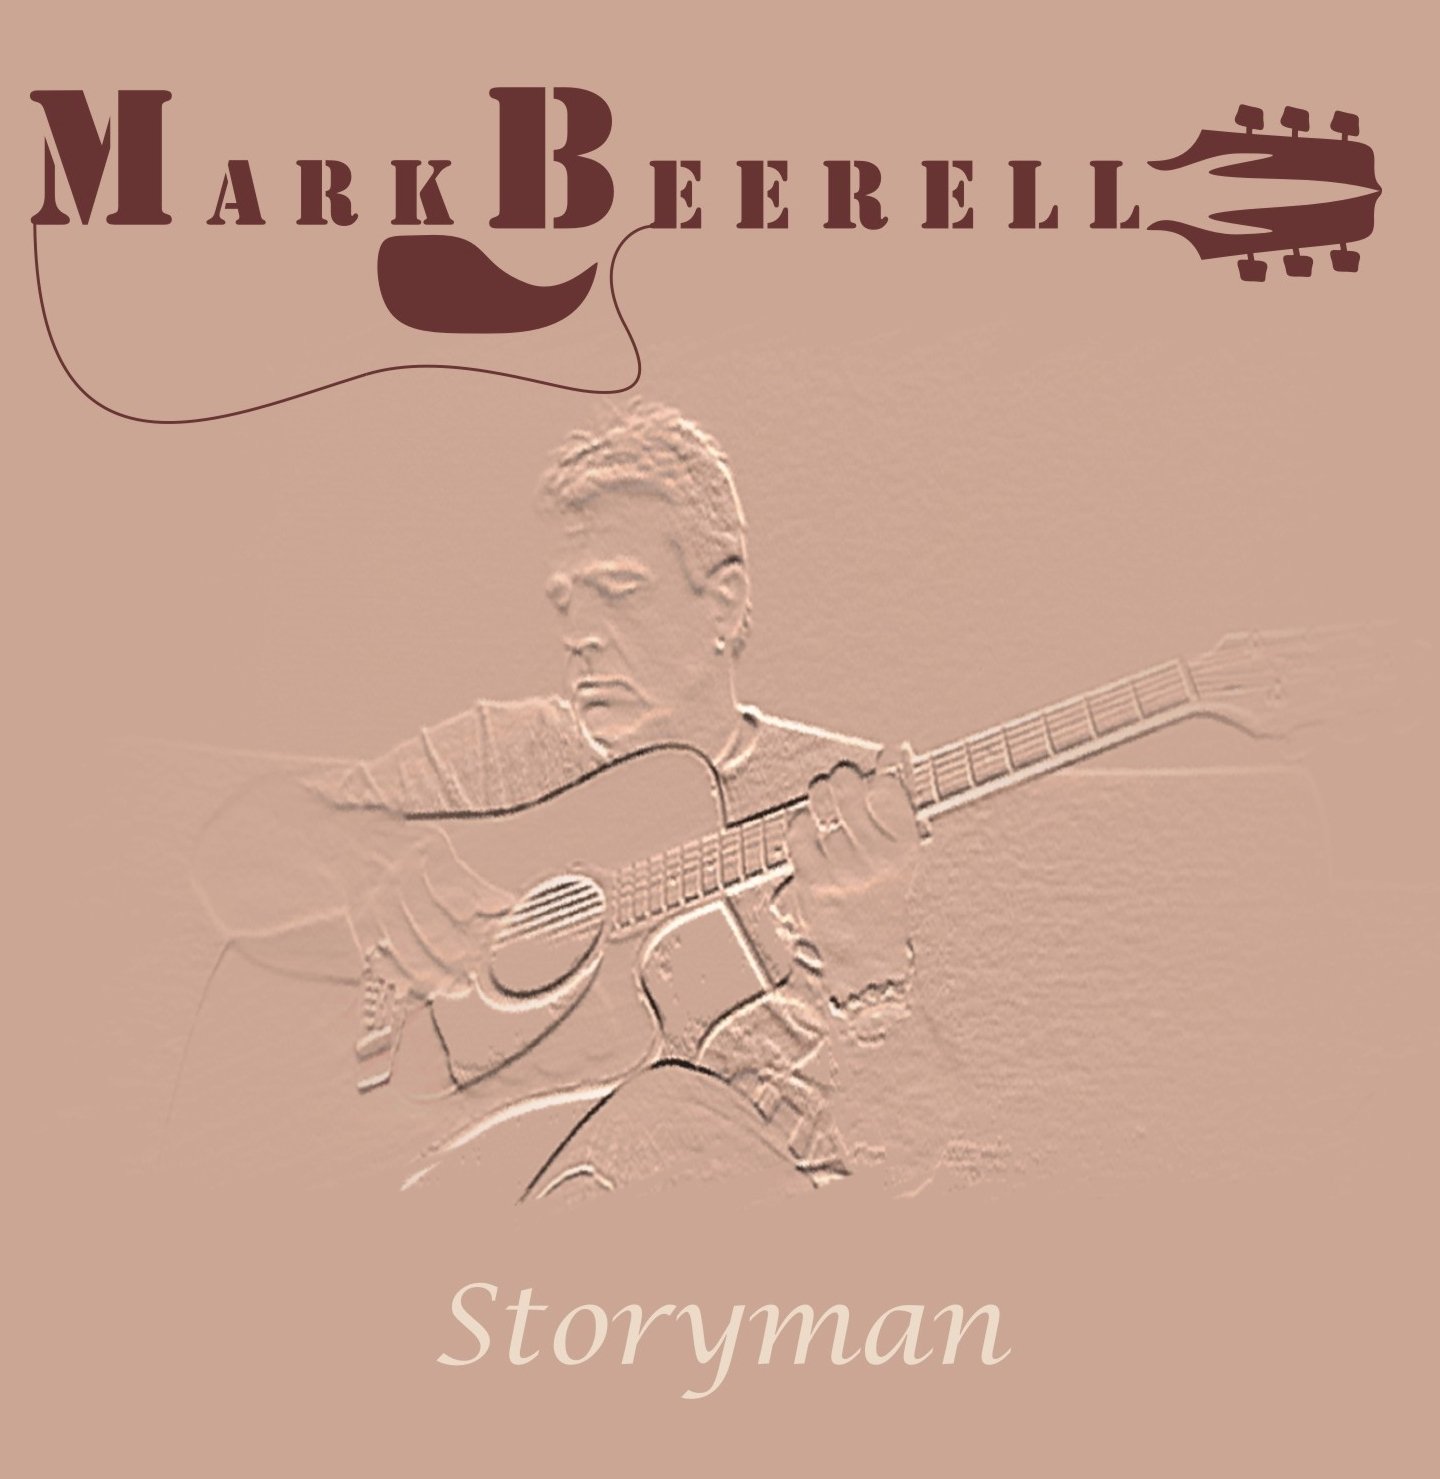 Mark Beerell